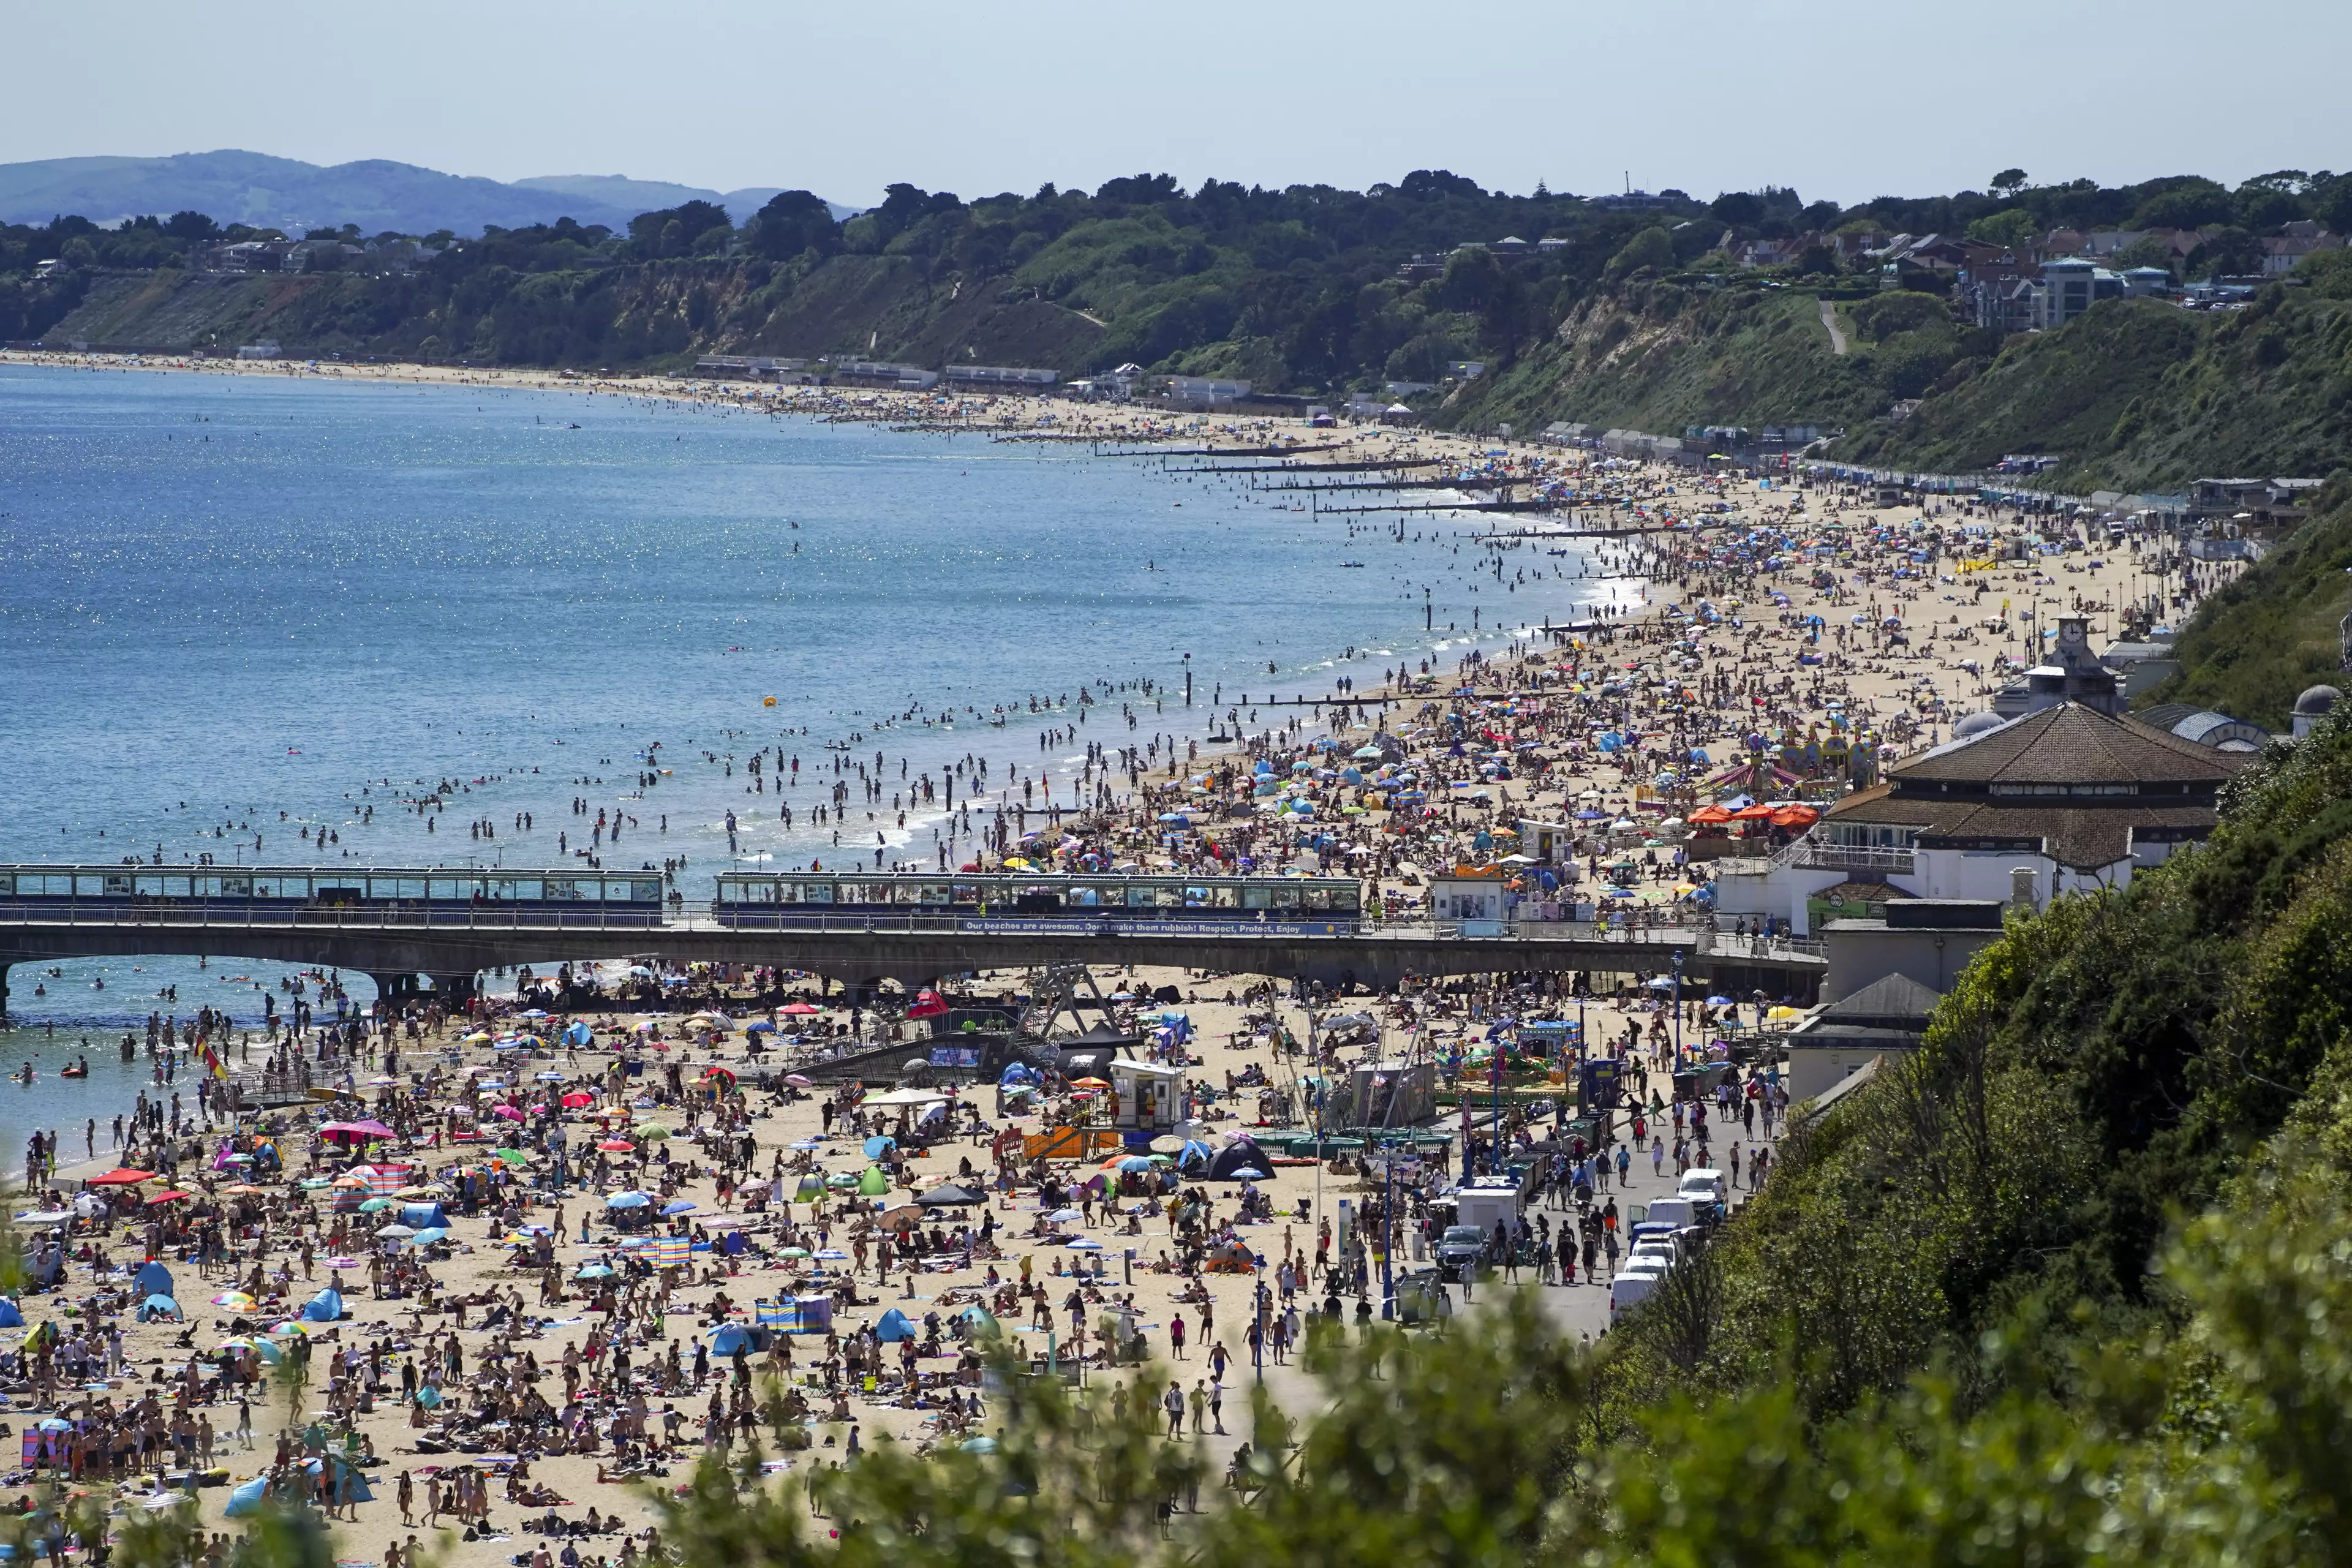 Bournemouth beaches was heaving last year (